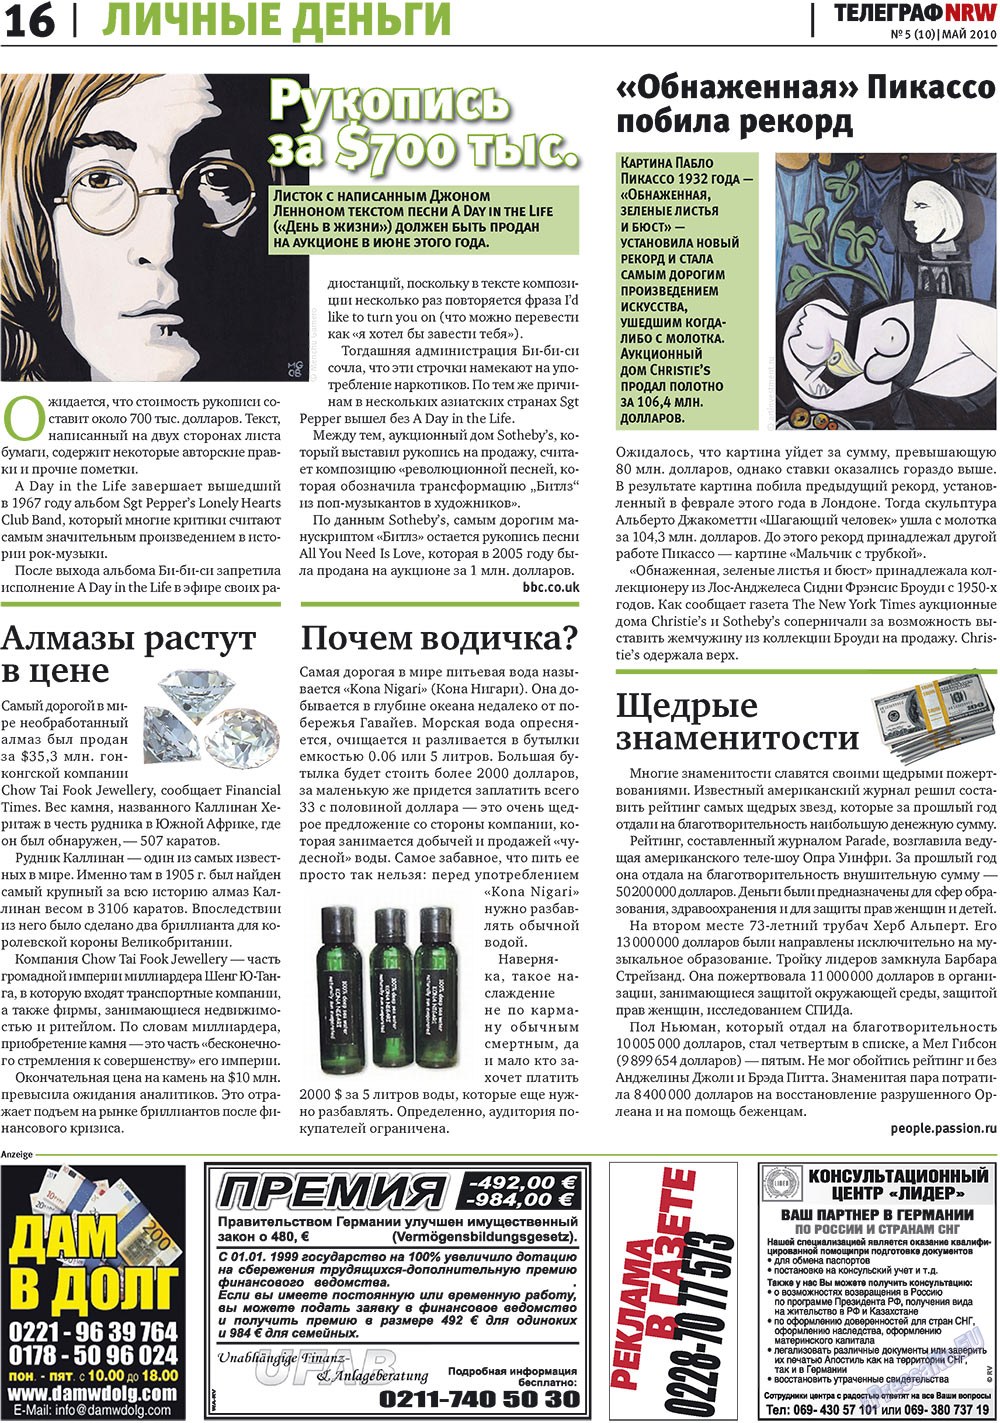 Телеграф NRW, газета. 2010 №5 стр.16